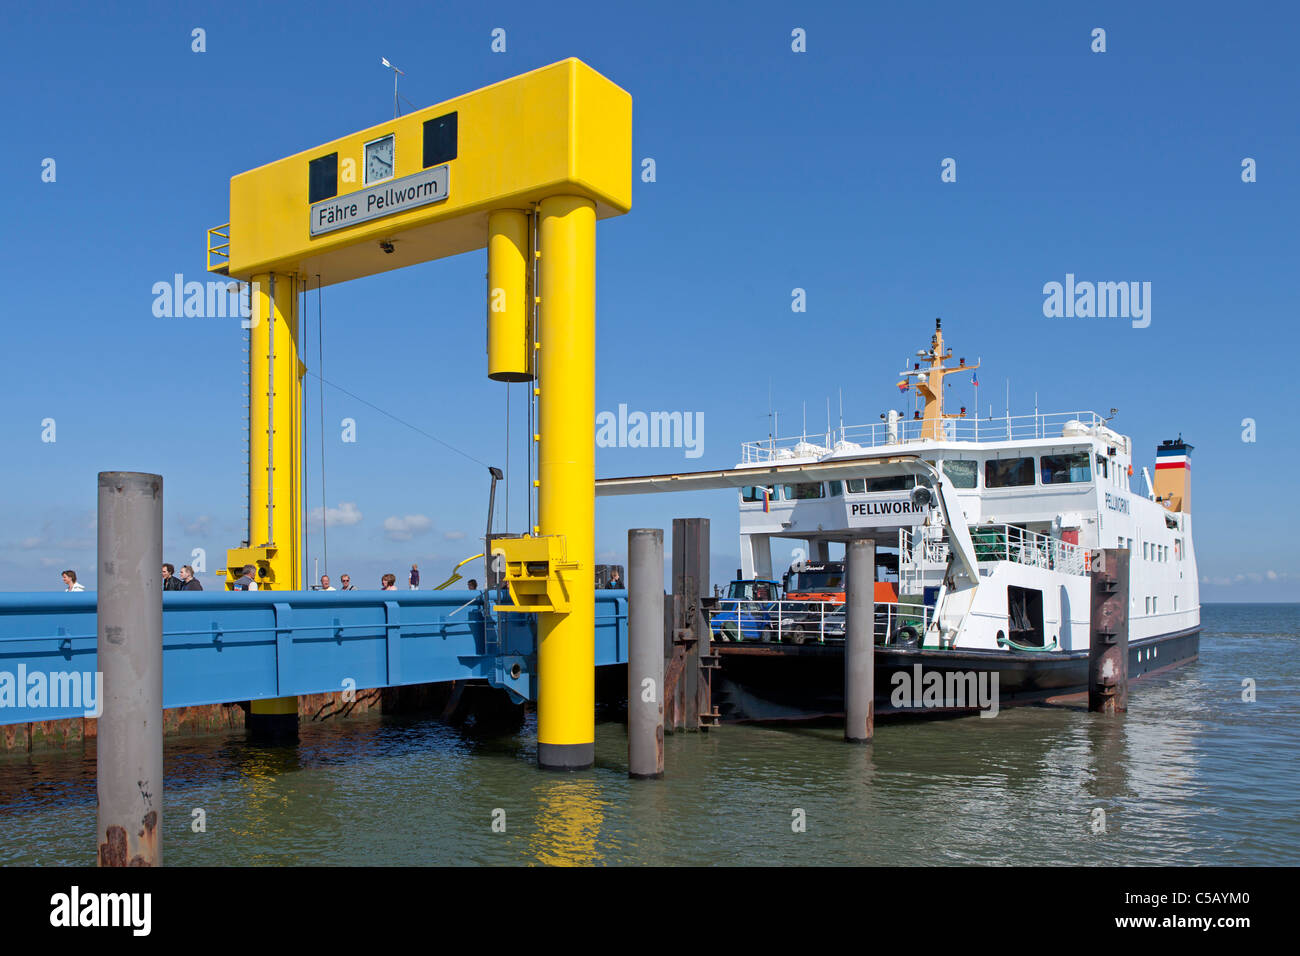 Pellworm-Ferry Strucklahnungshoern au port de la péninsule de Nordstrand, Schleswig-Holstein, Allemagne Banque D'Images